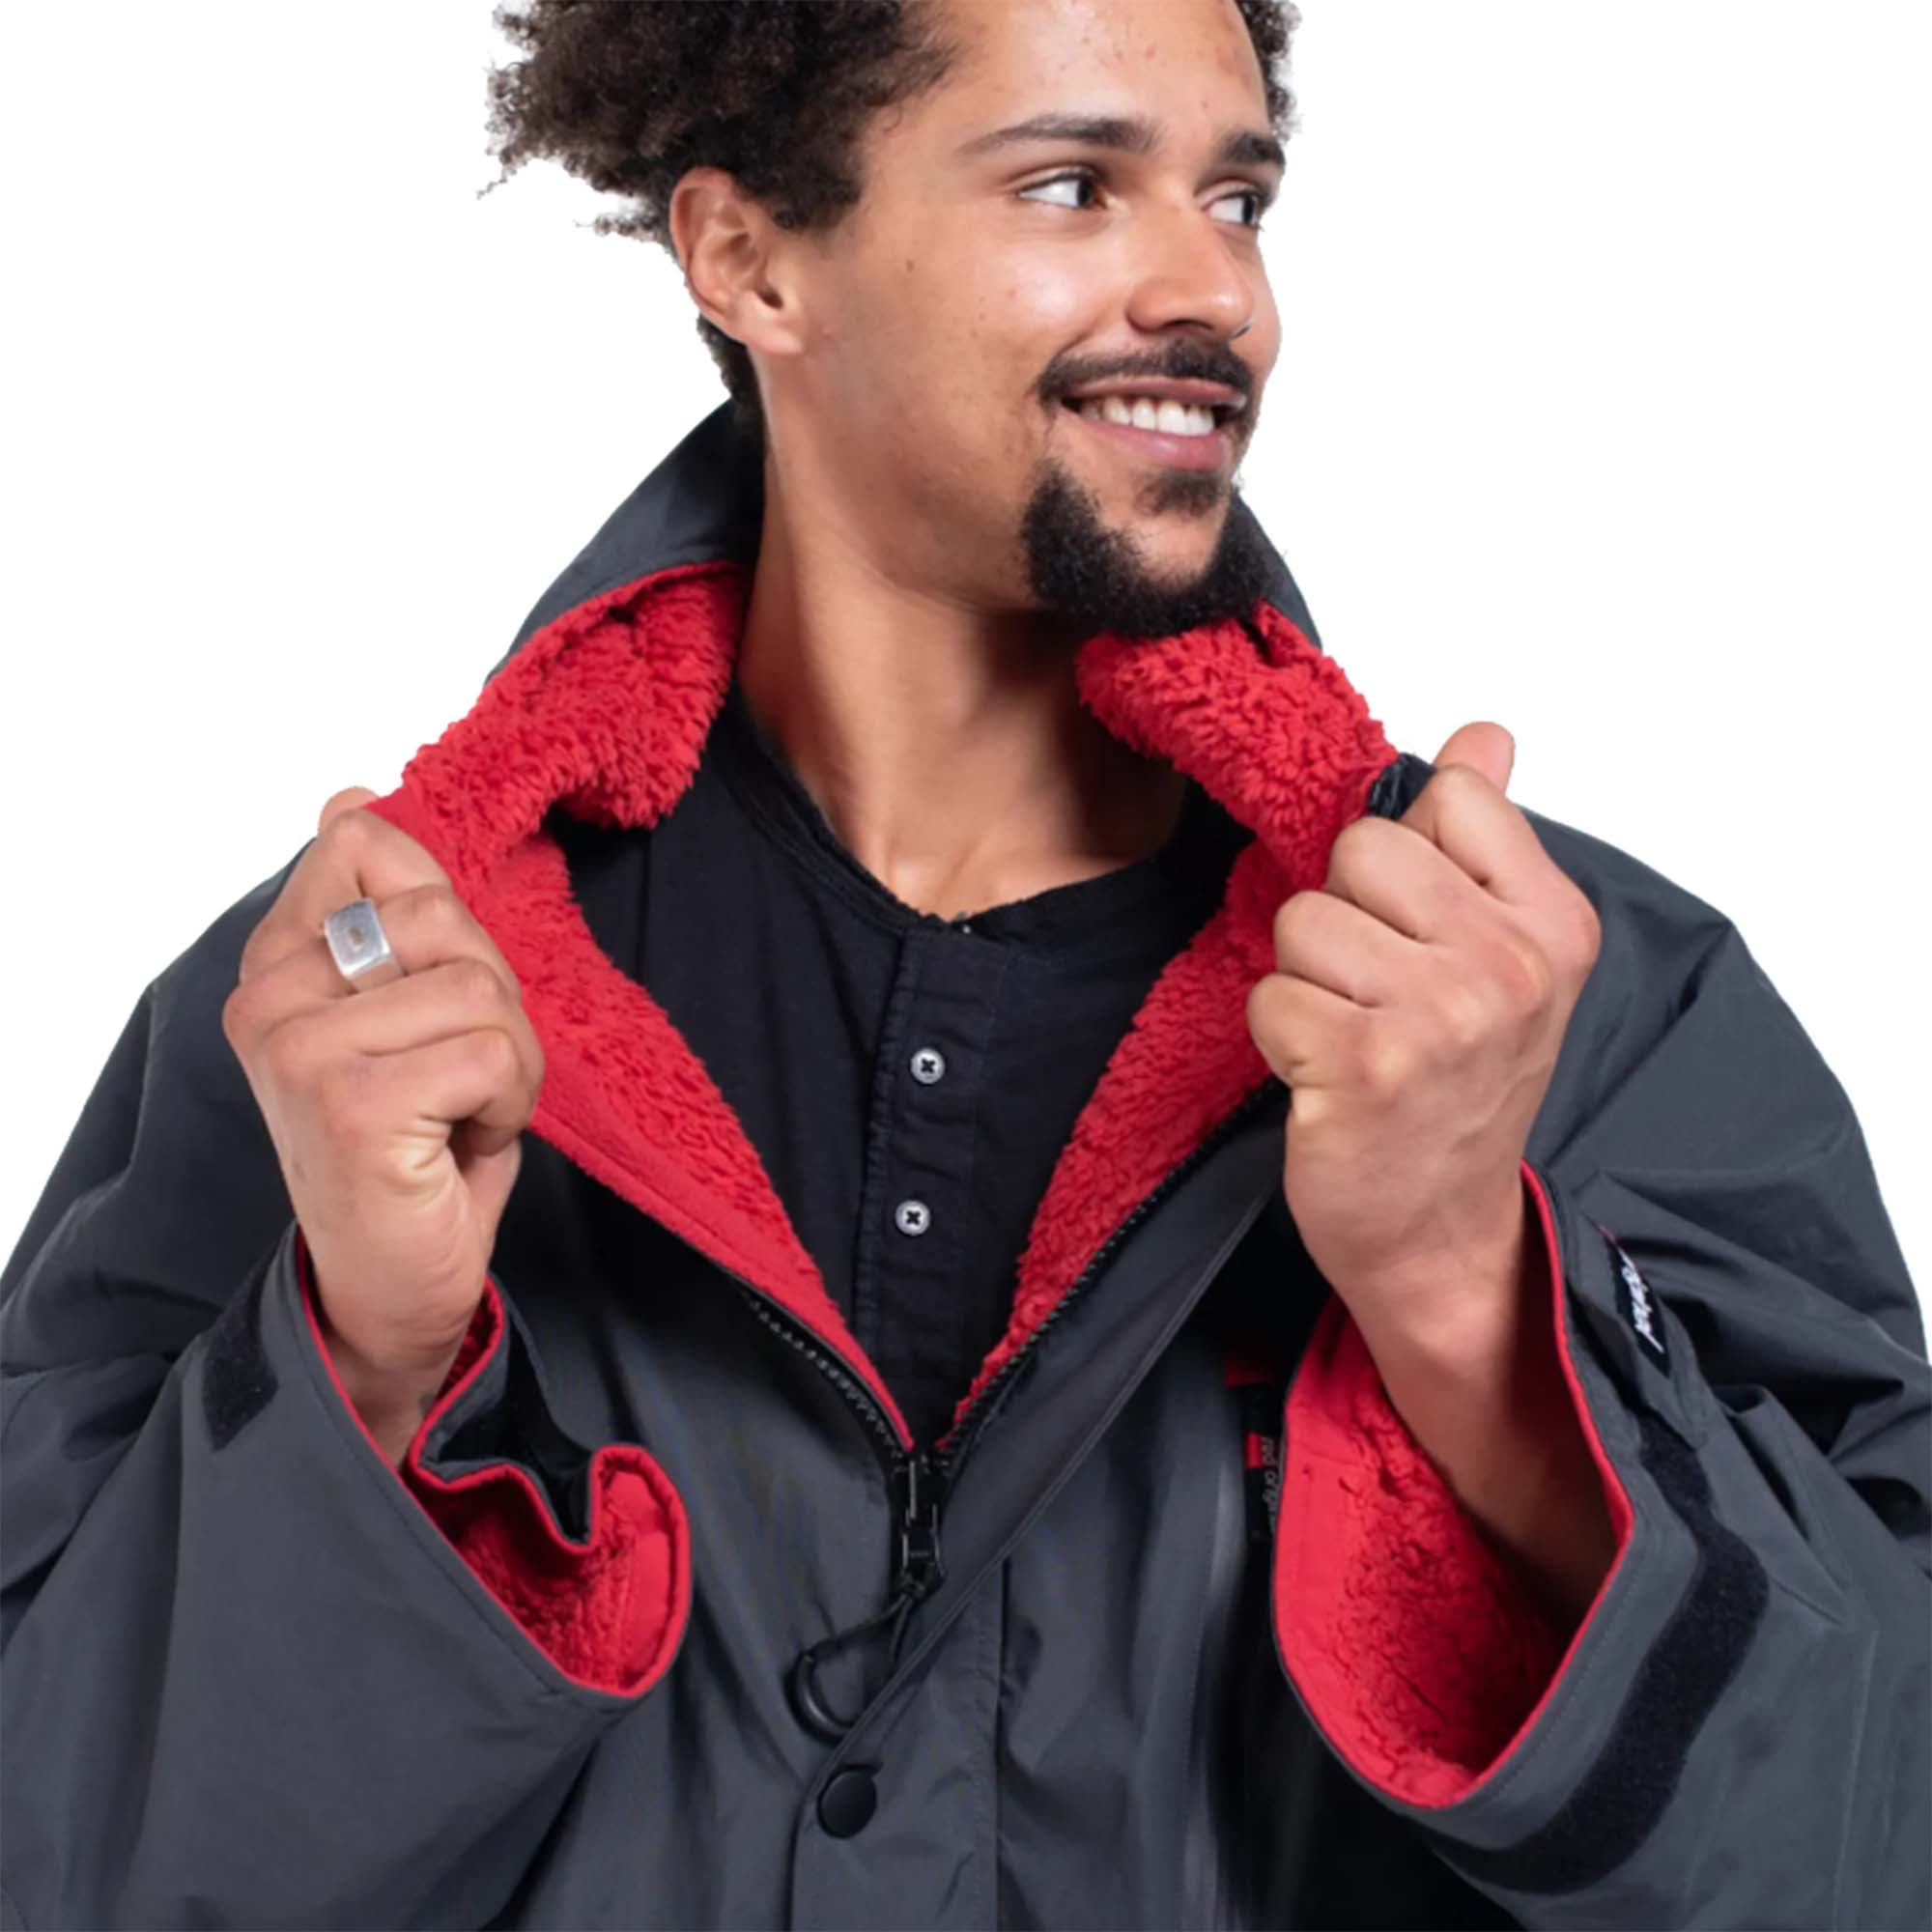 Red Pro Change Robe EVO LS Dressing Dry Jacket